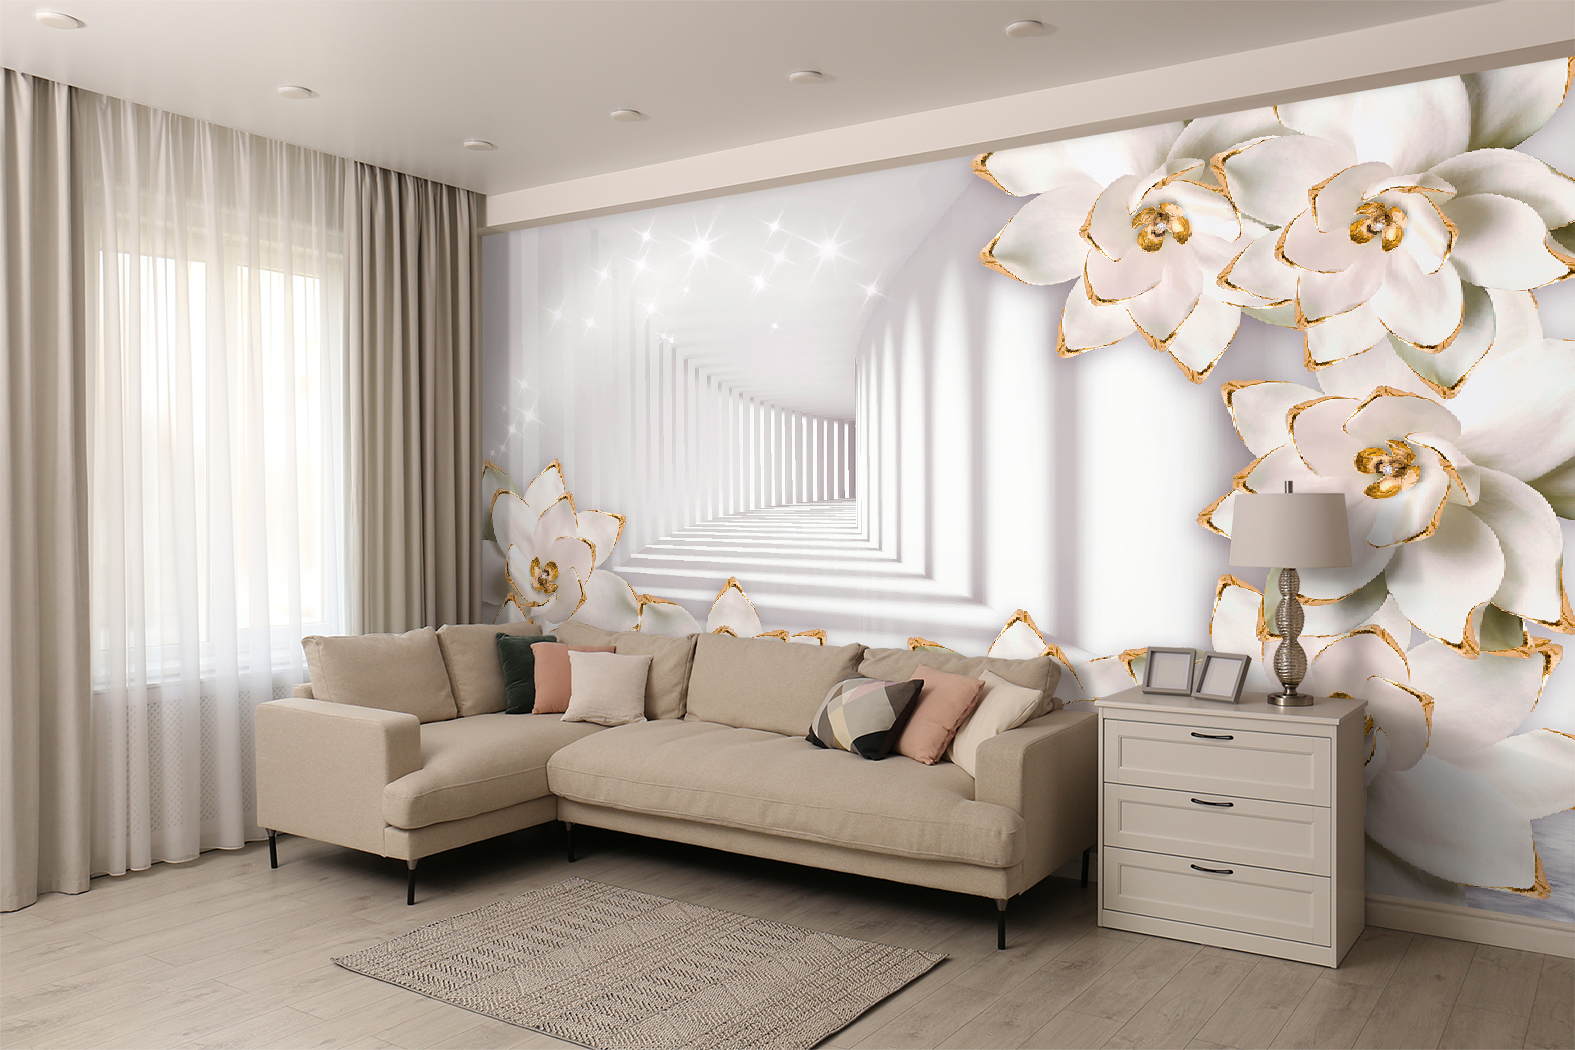 Фотообои Photostena 3D коридор и белые цветы 4,58 x 2,85 м led xp 5725 6m 230v s белые led прозрачный пр